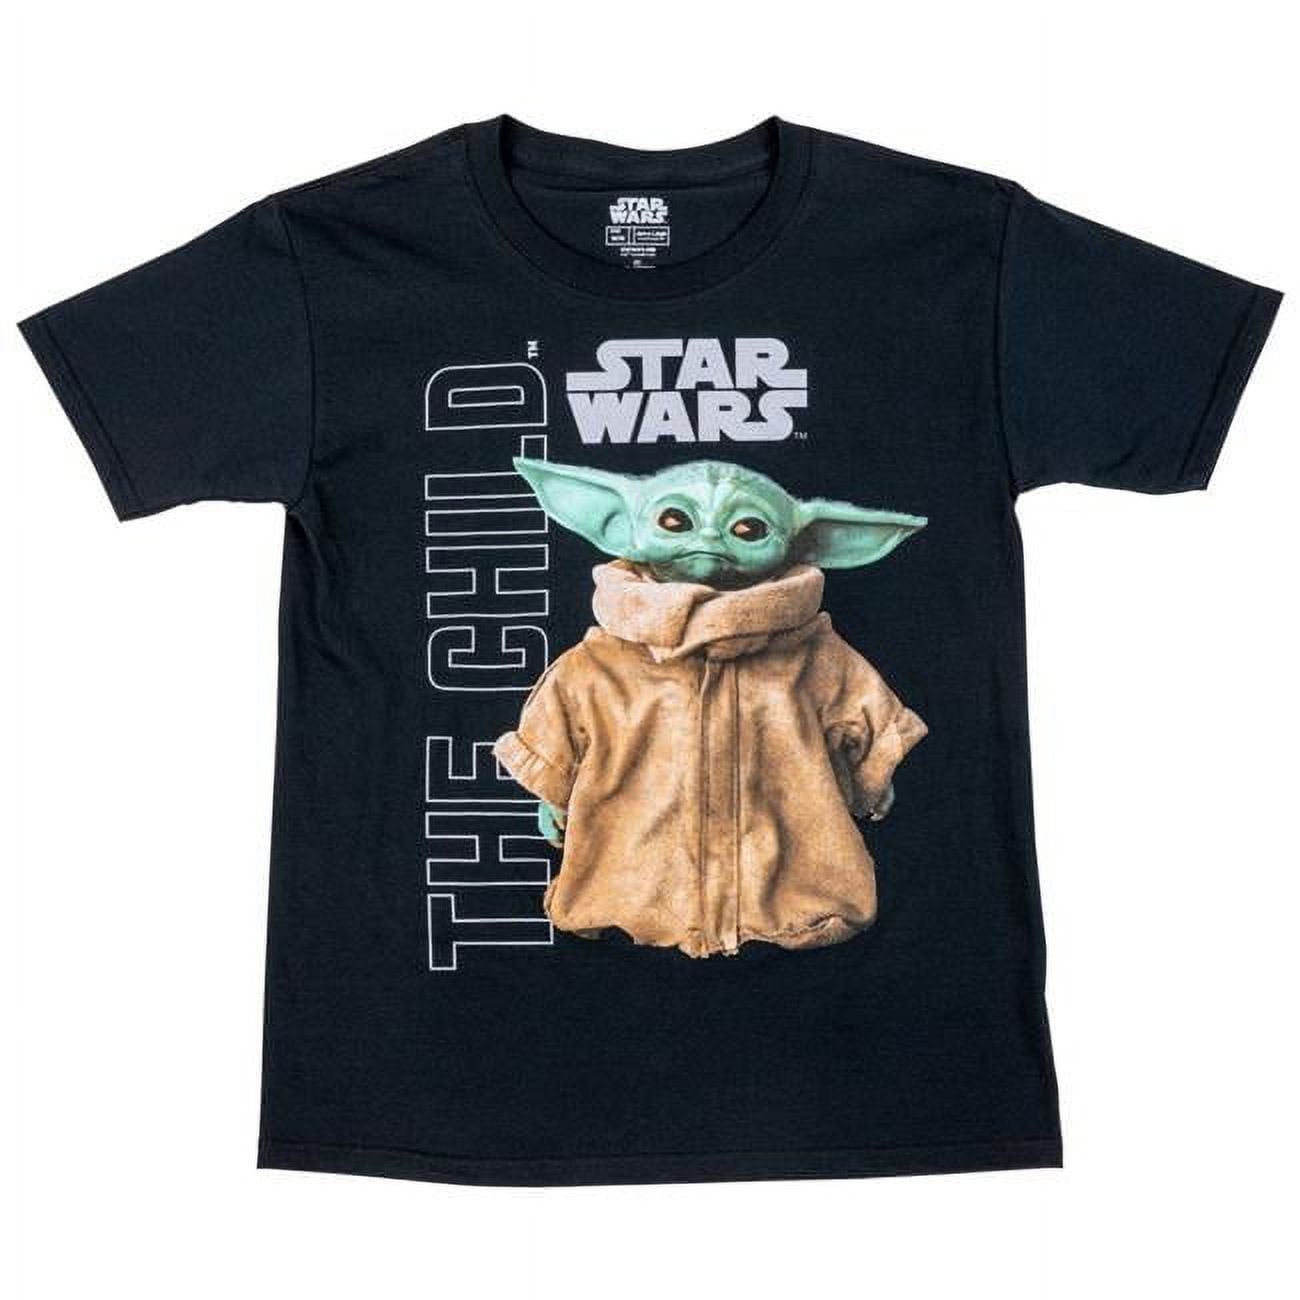 Star Wars Character Mandalorian Kids T-Shirt-Large The The Child (10-12)